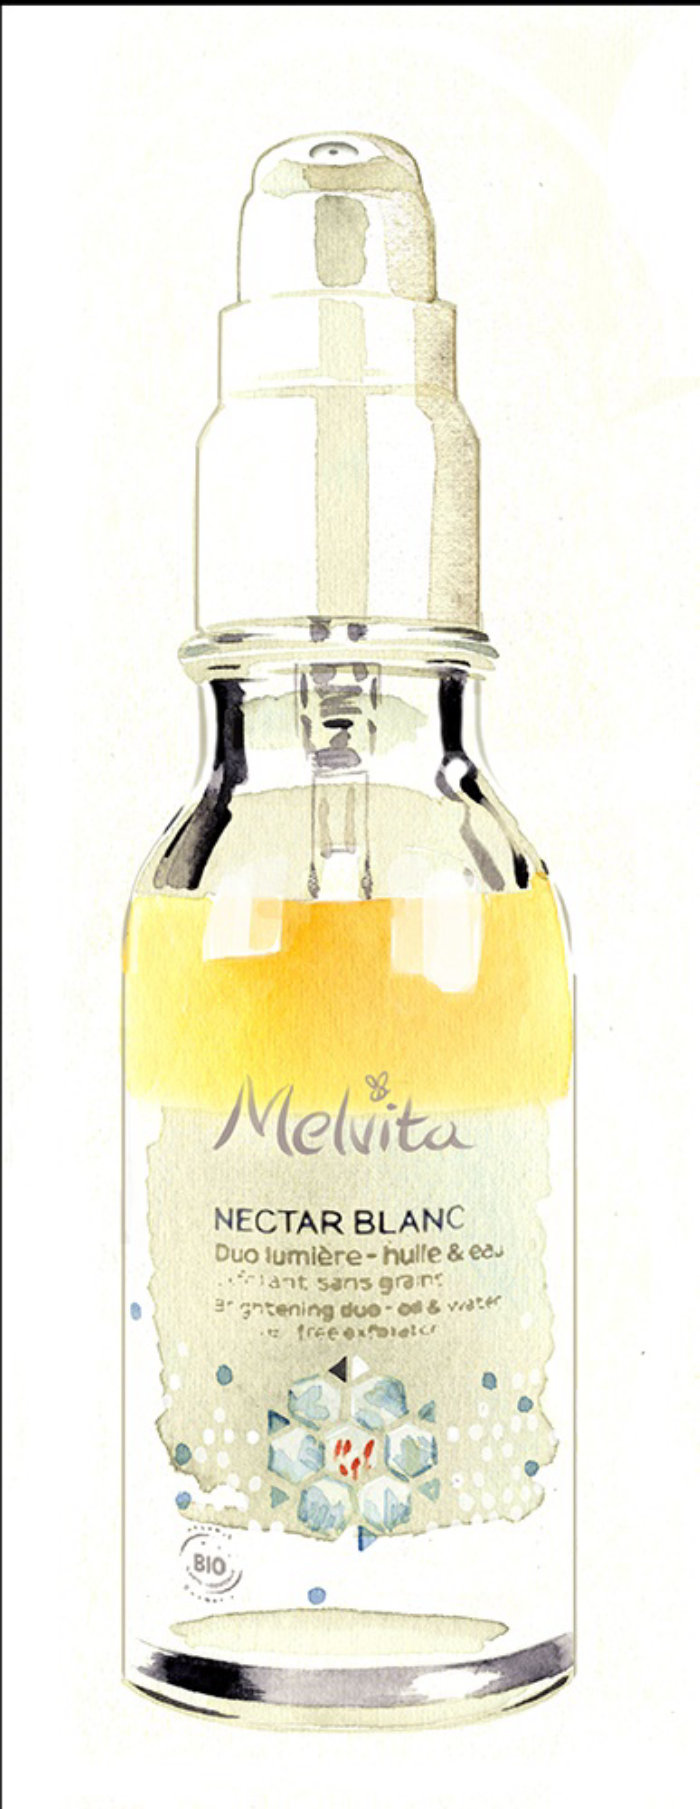 Melvita-Nectar Blanc 自然派化粧品パッケージ